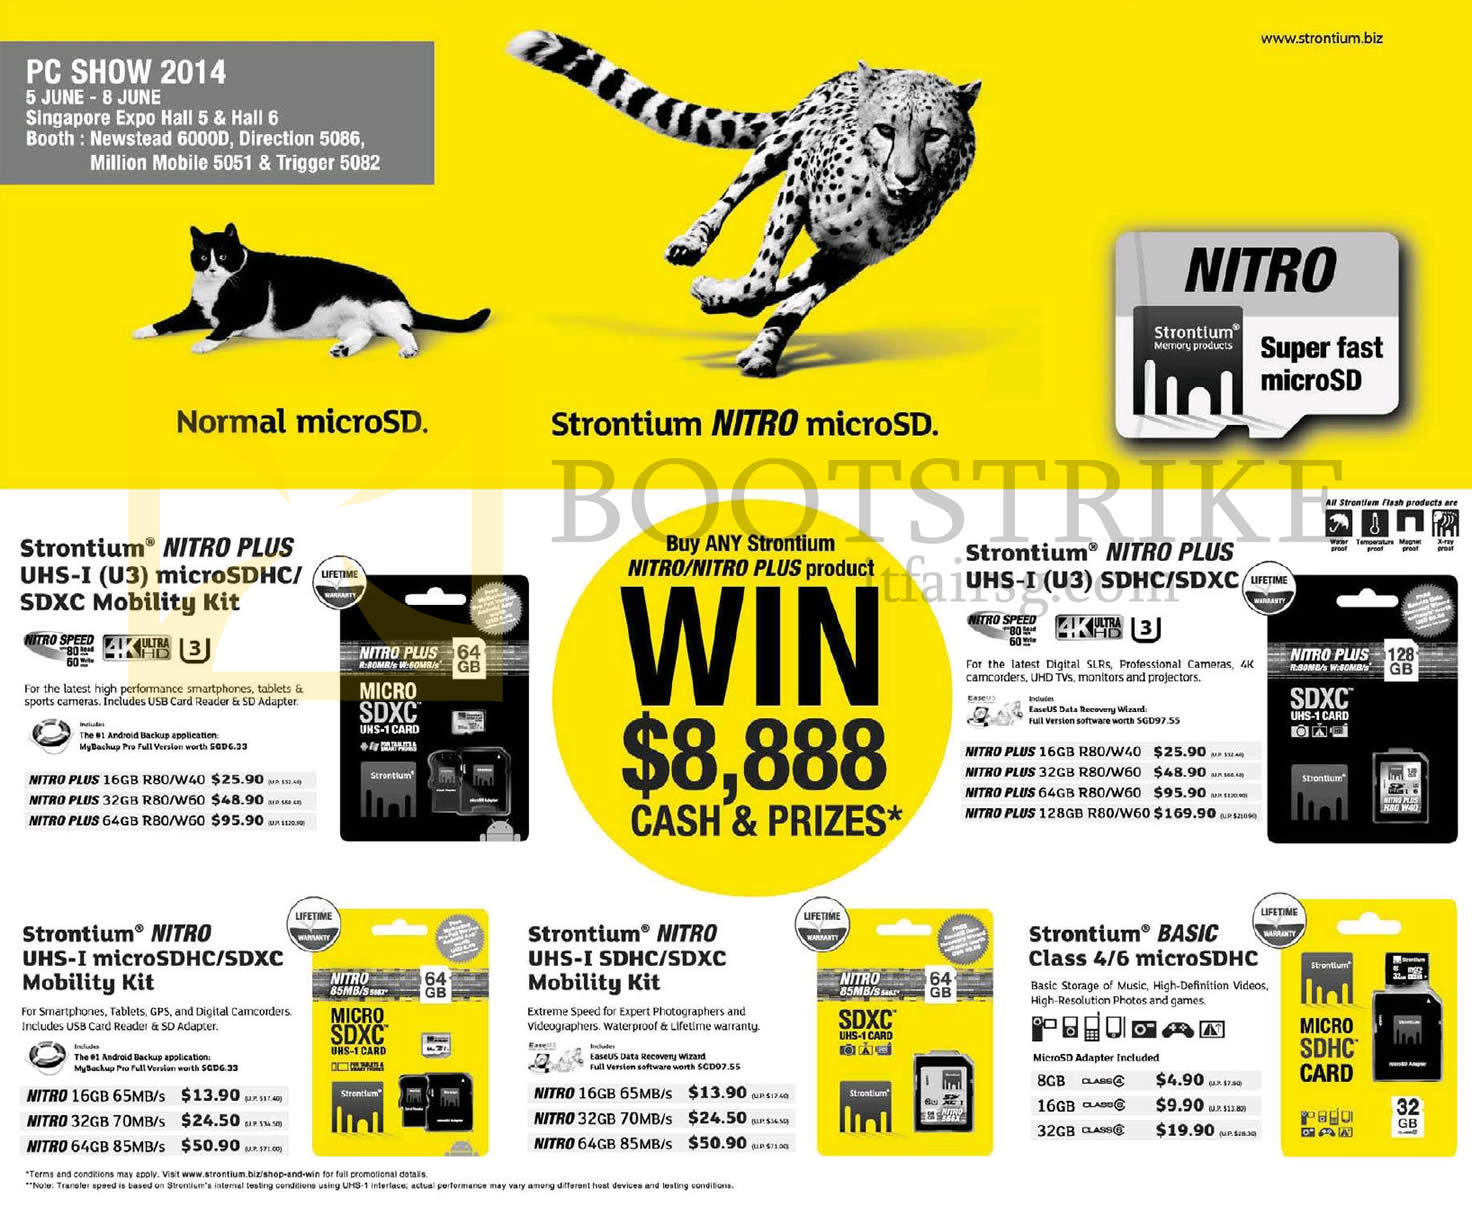 PC SHOW 2014 price list image brochure of Strontium Flash Memory Cards Nitro Plus UHS MicroSDHC, SDXC